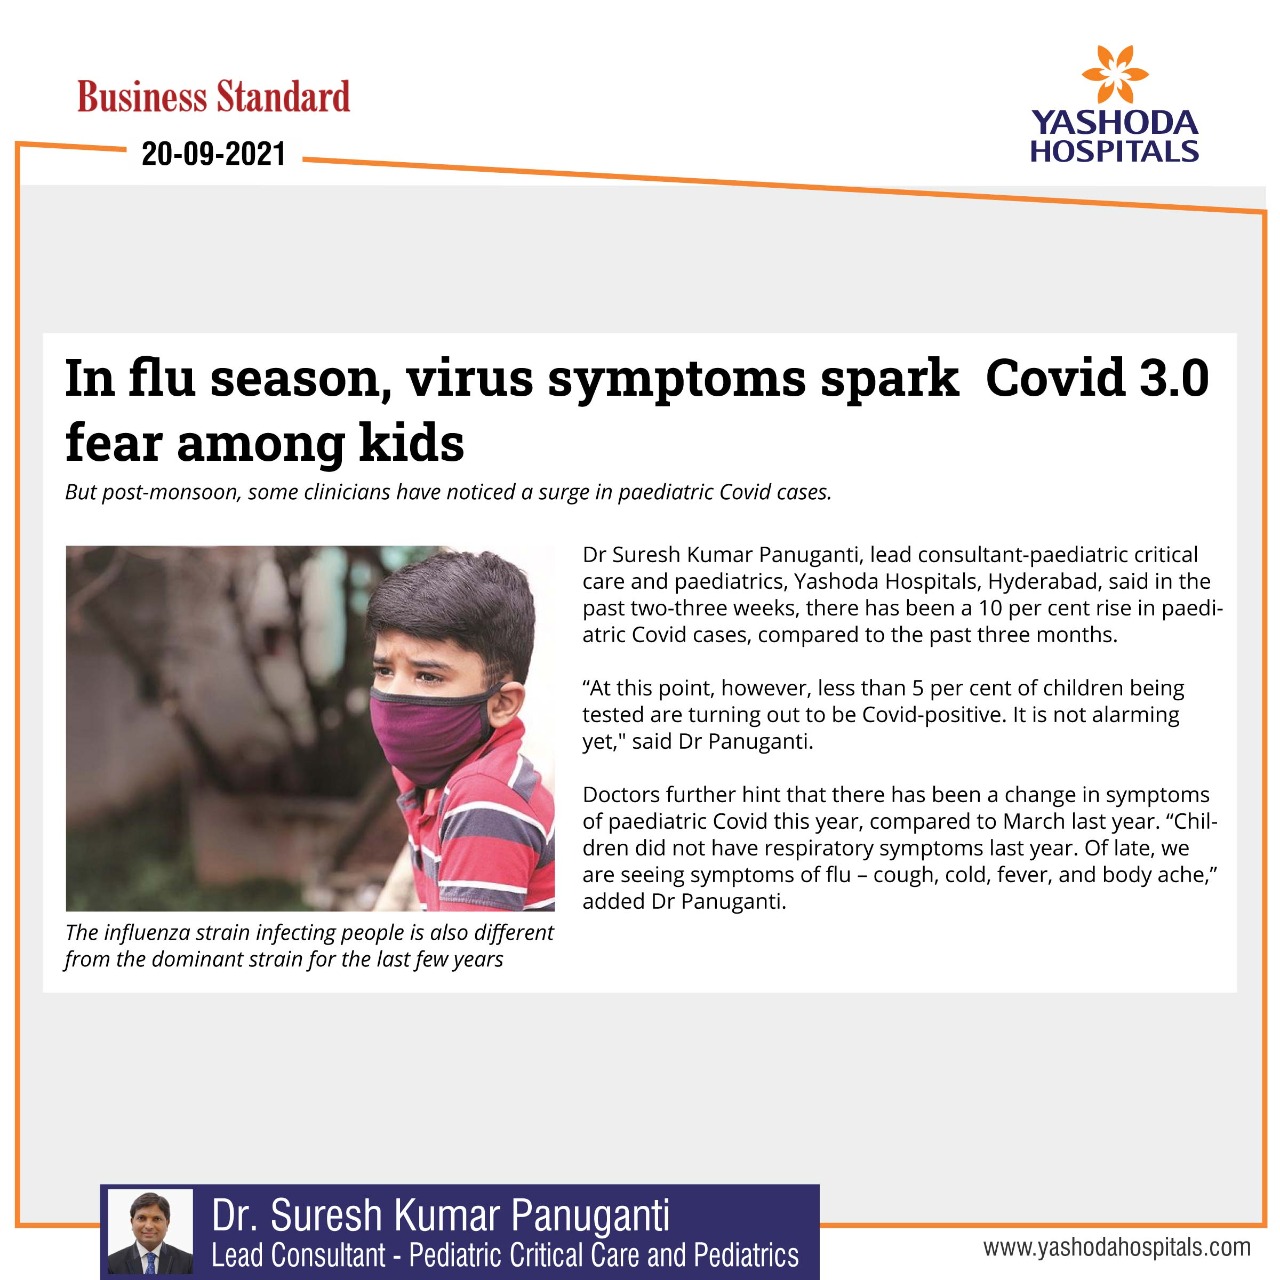 Virus symptoms spark Covid 3.0 symptoms among kids